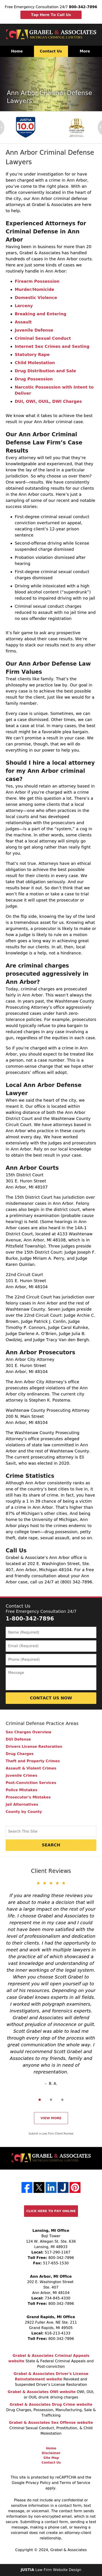 Grabel & Associates - Ann Arbor MI Lawyers